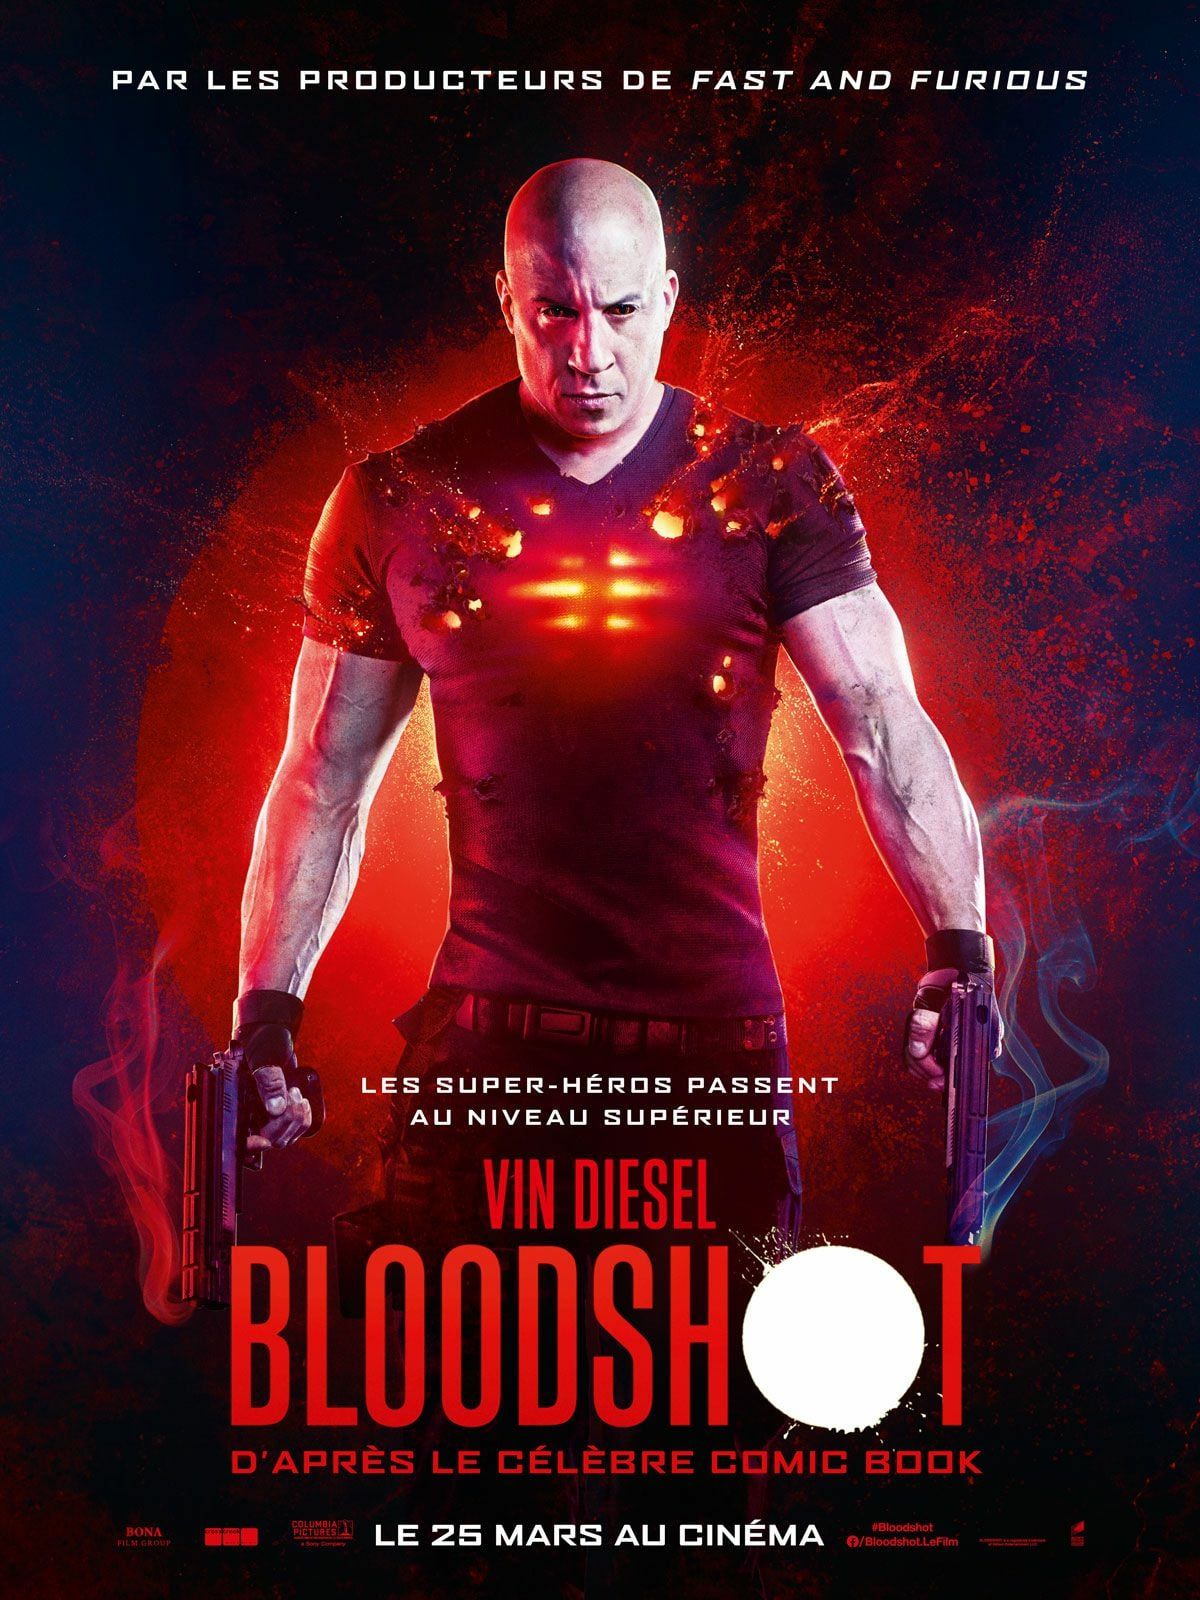 download bloodshot film